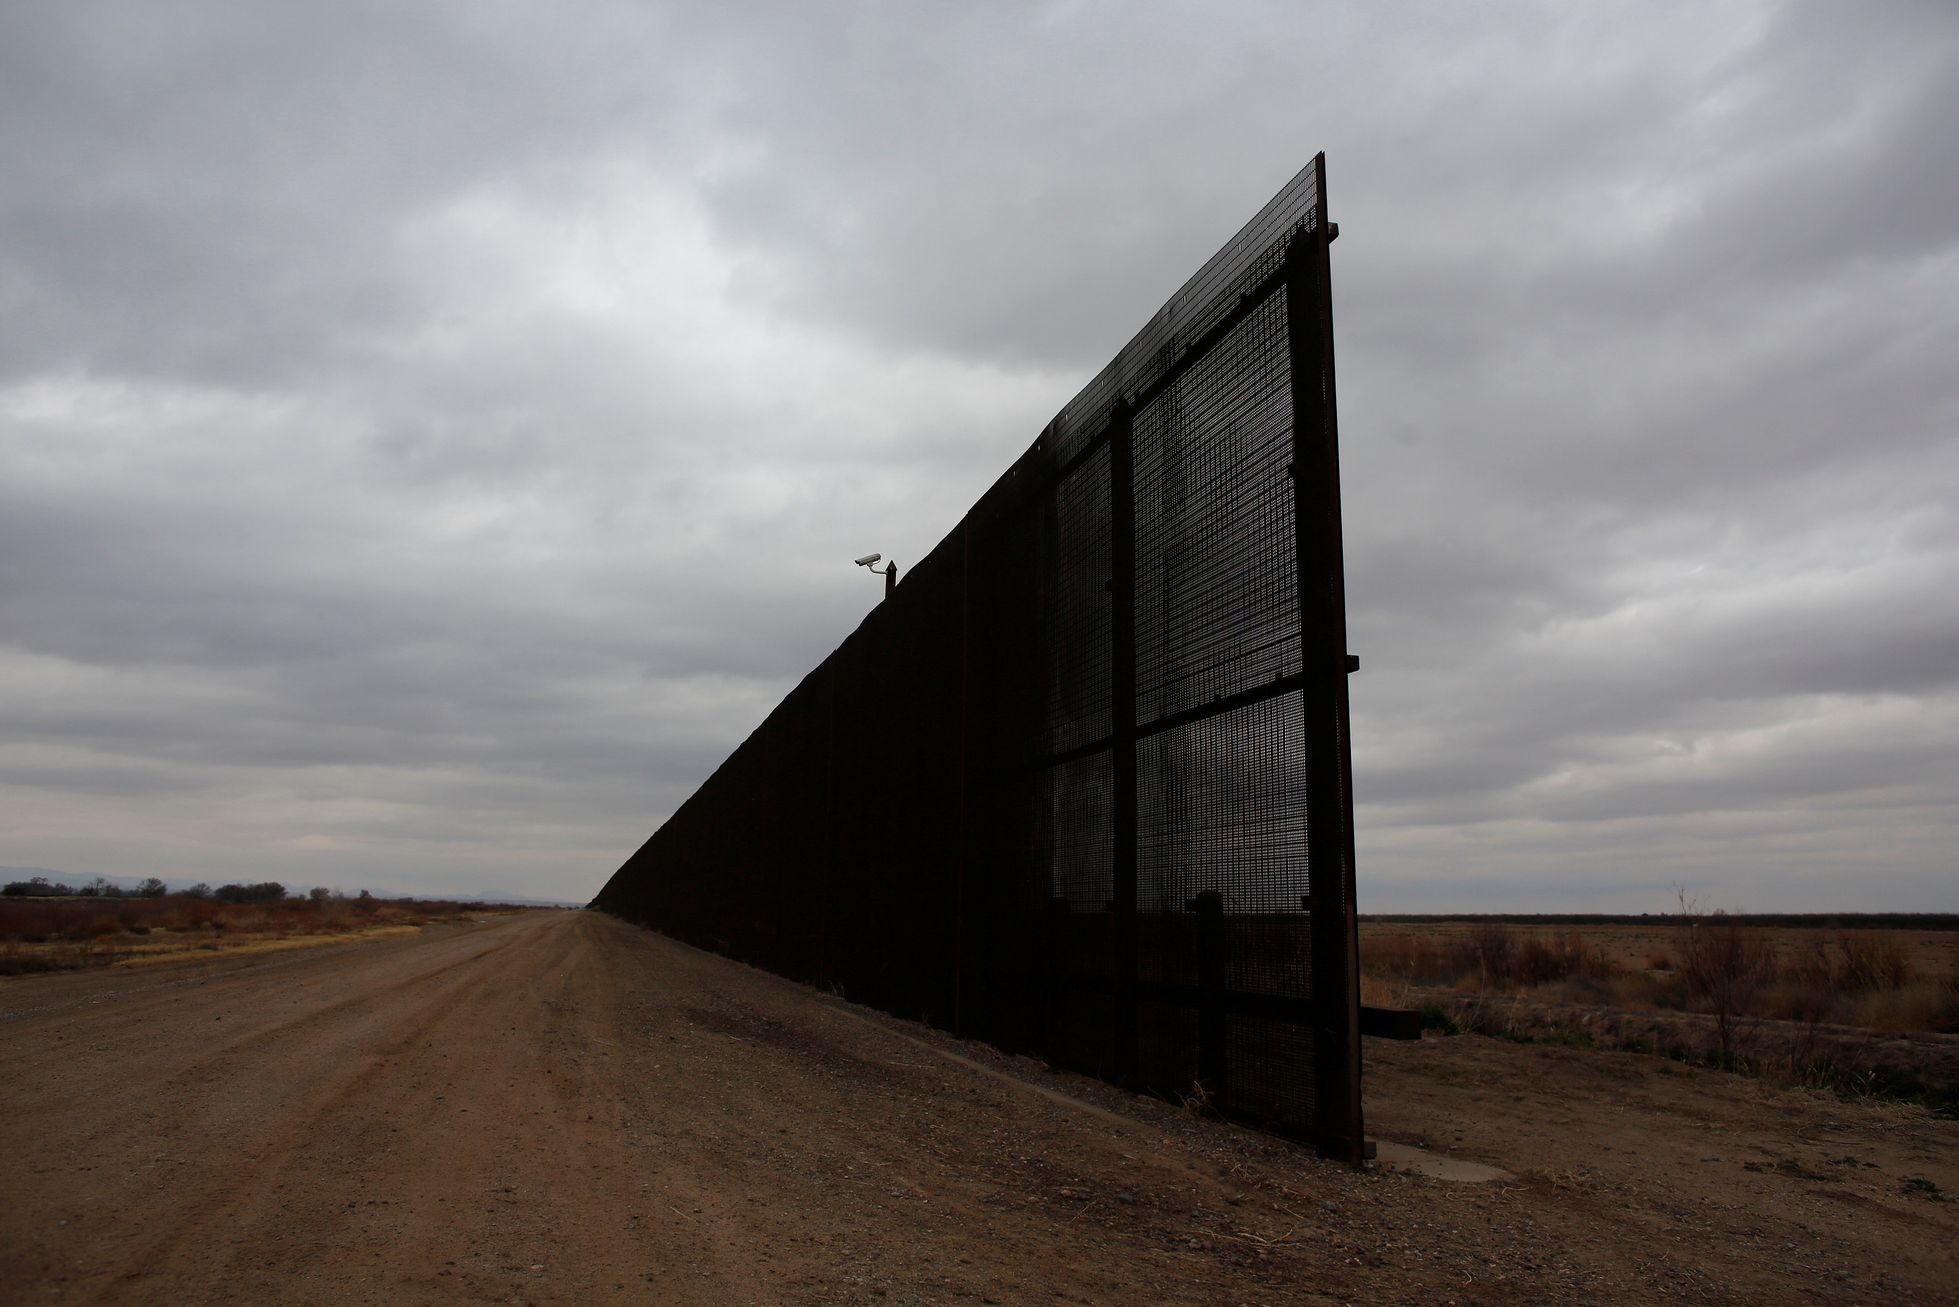 "Díra" v plotu na mexicko-amerických hranicích u El Pasa.